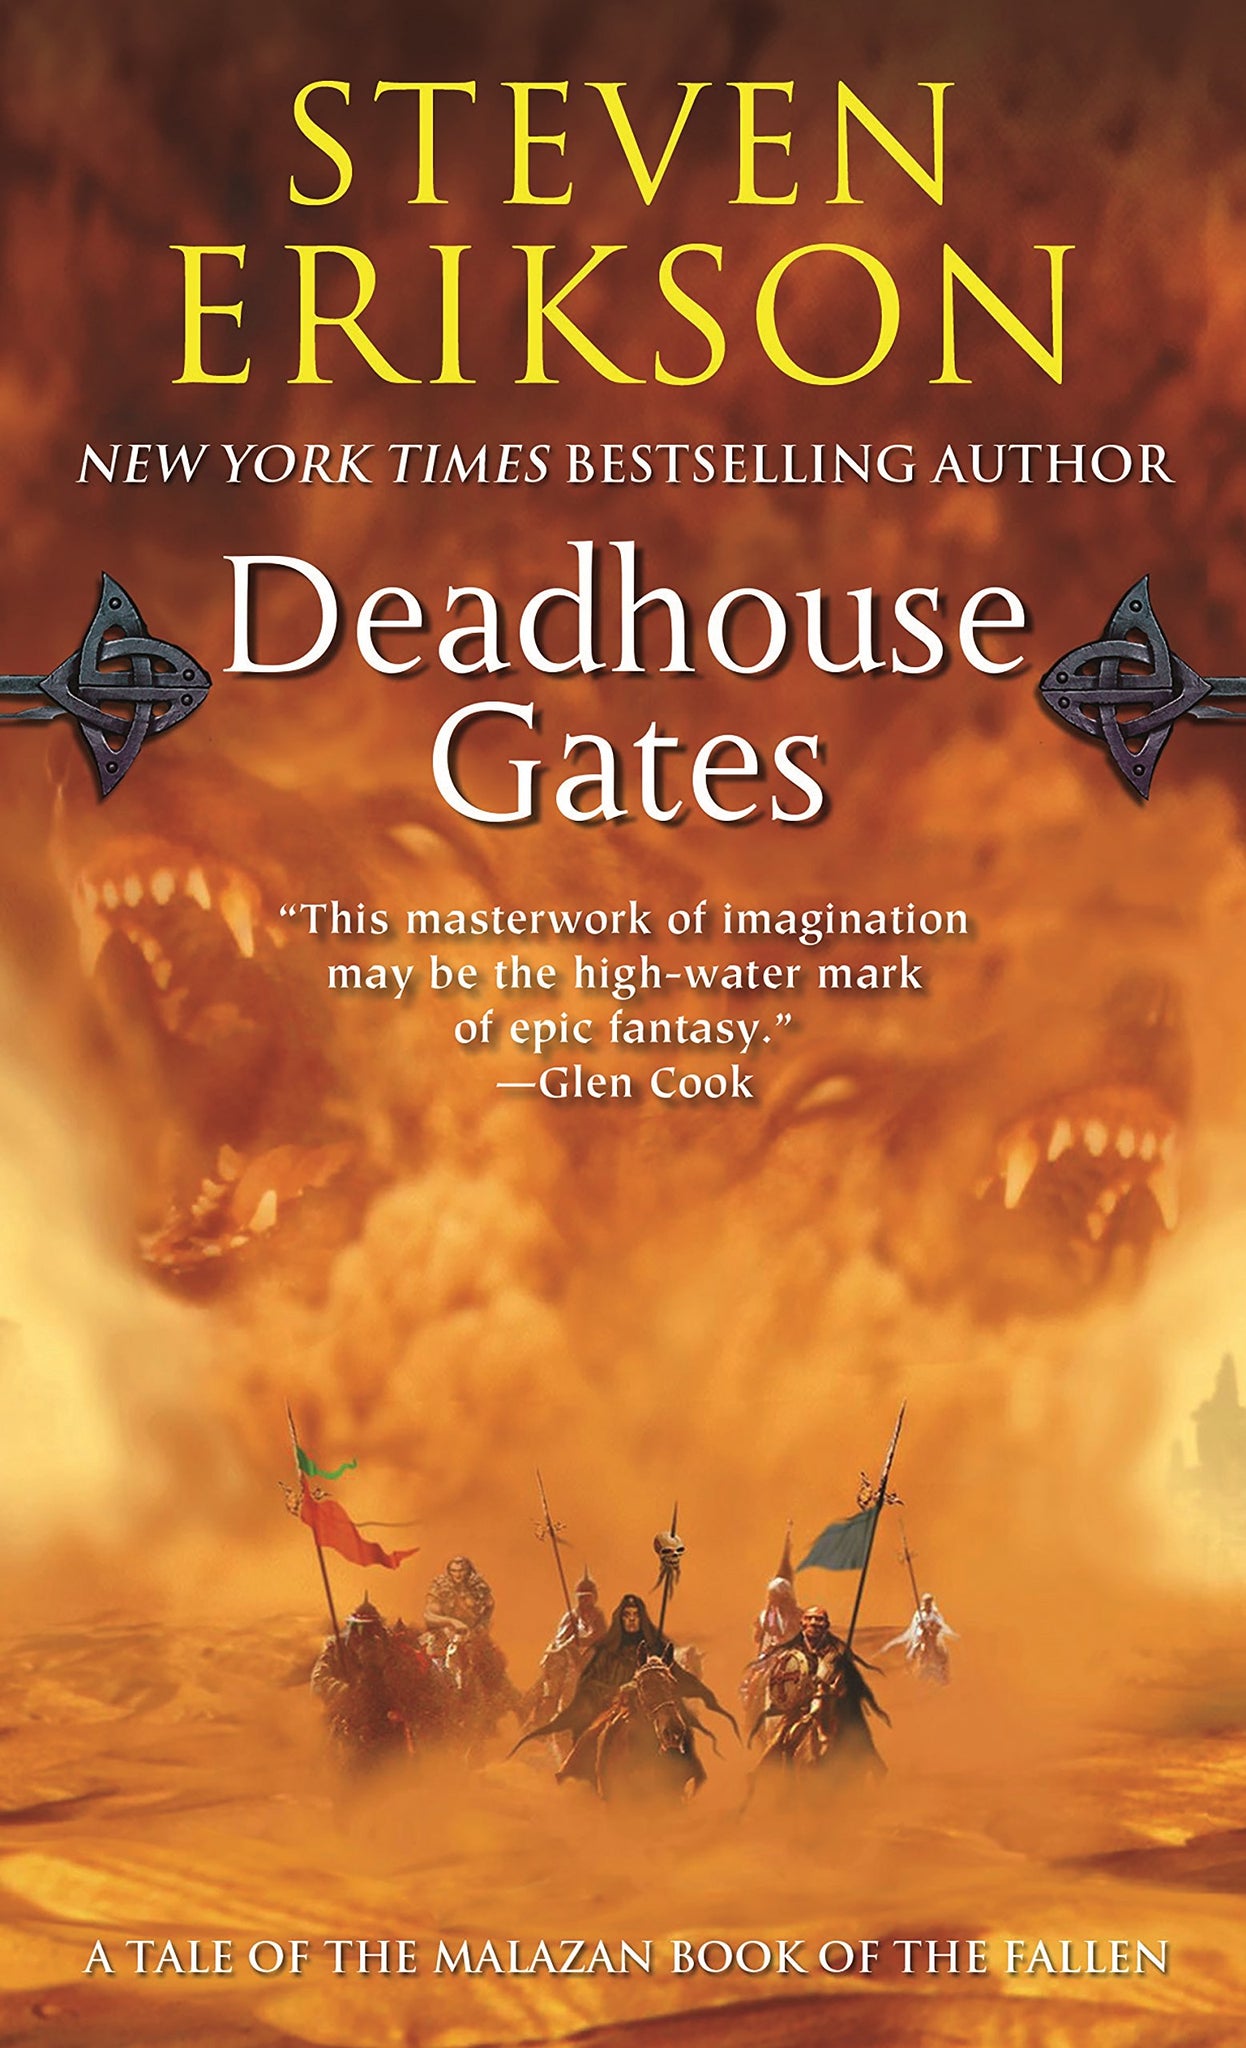 Malazan Book of the Fallen #2 : Deadhouse Gates by Steven Erikson